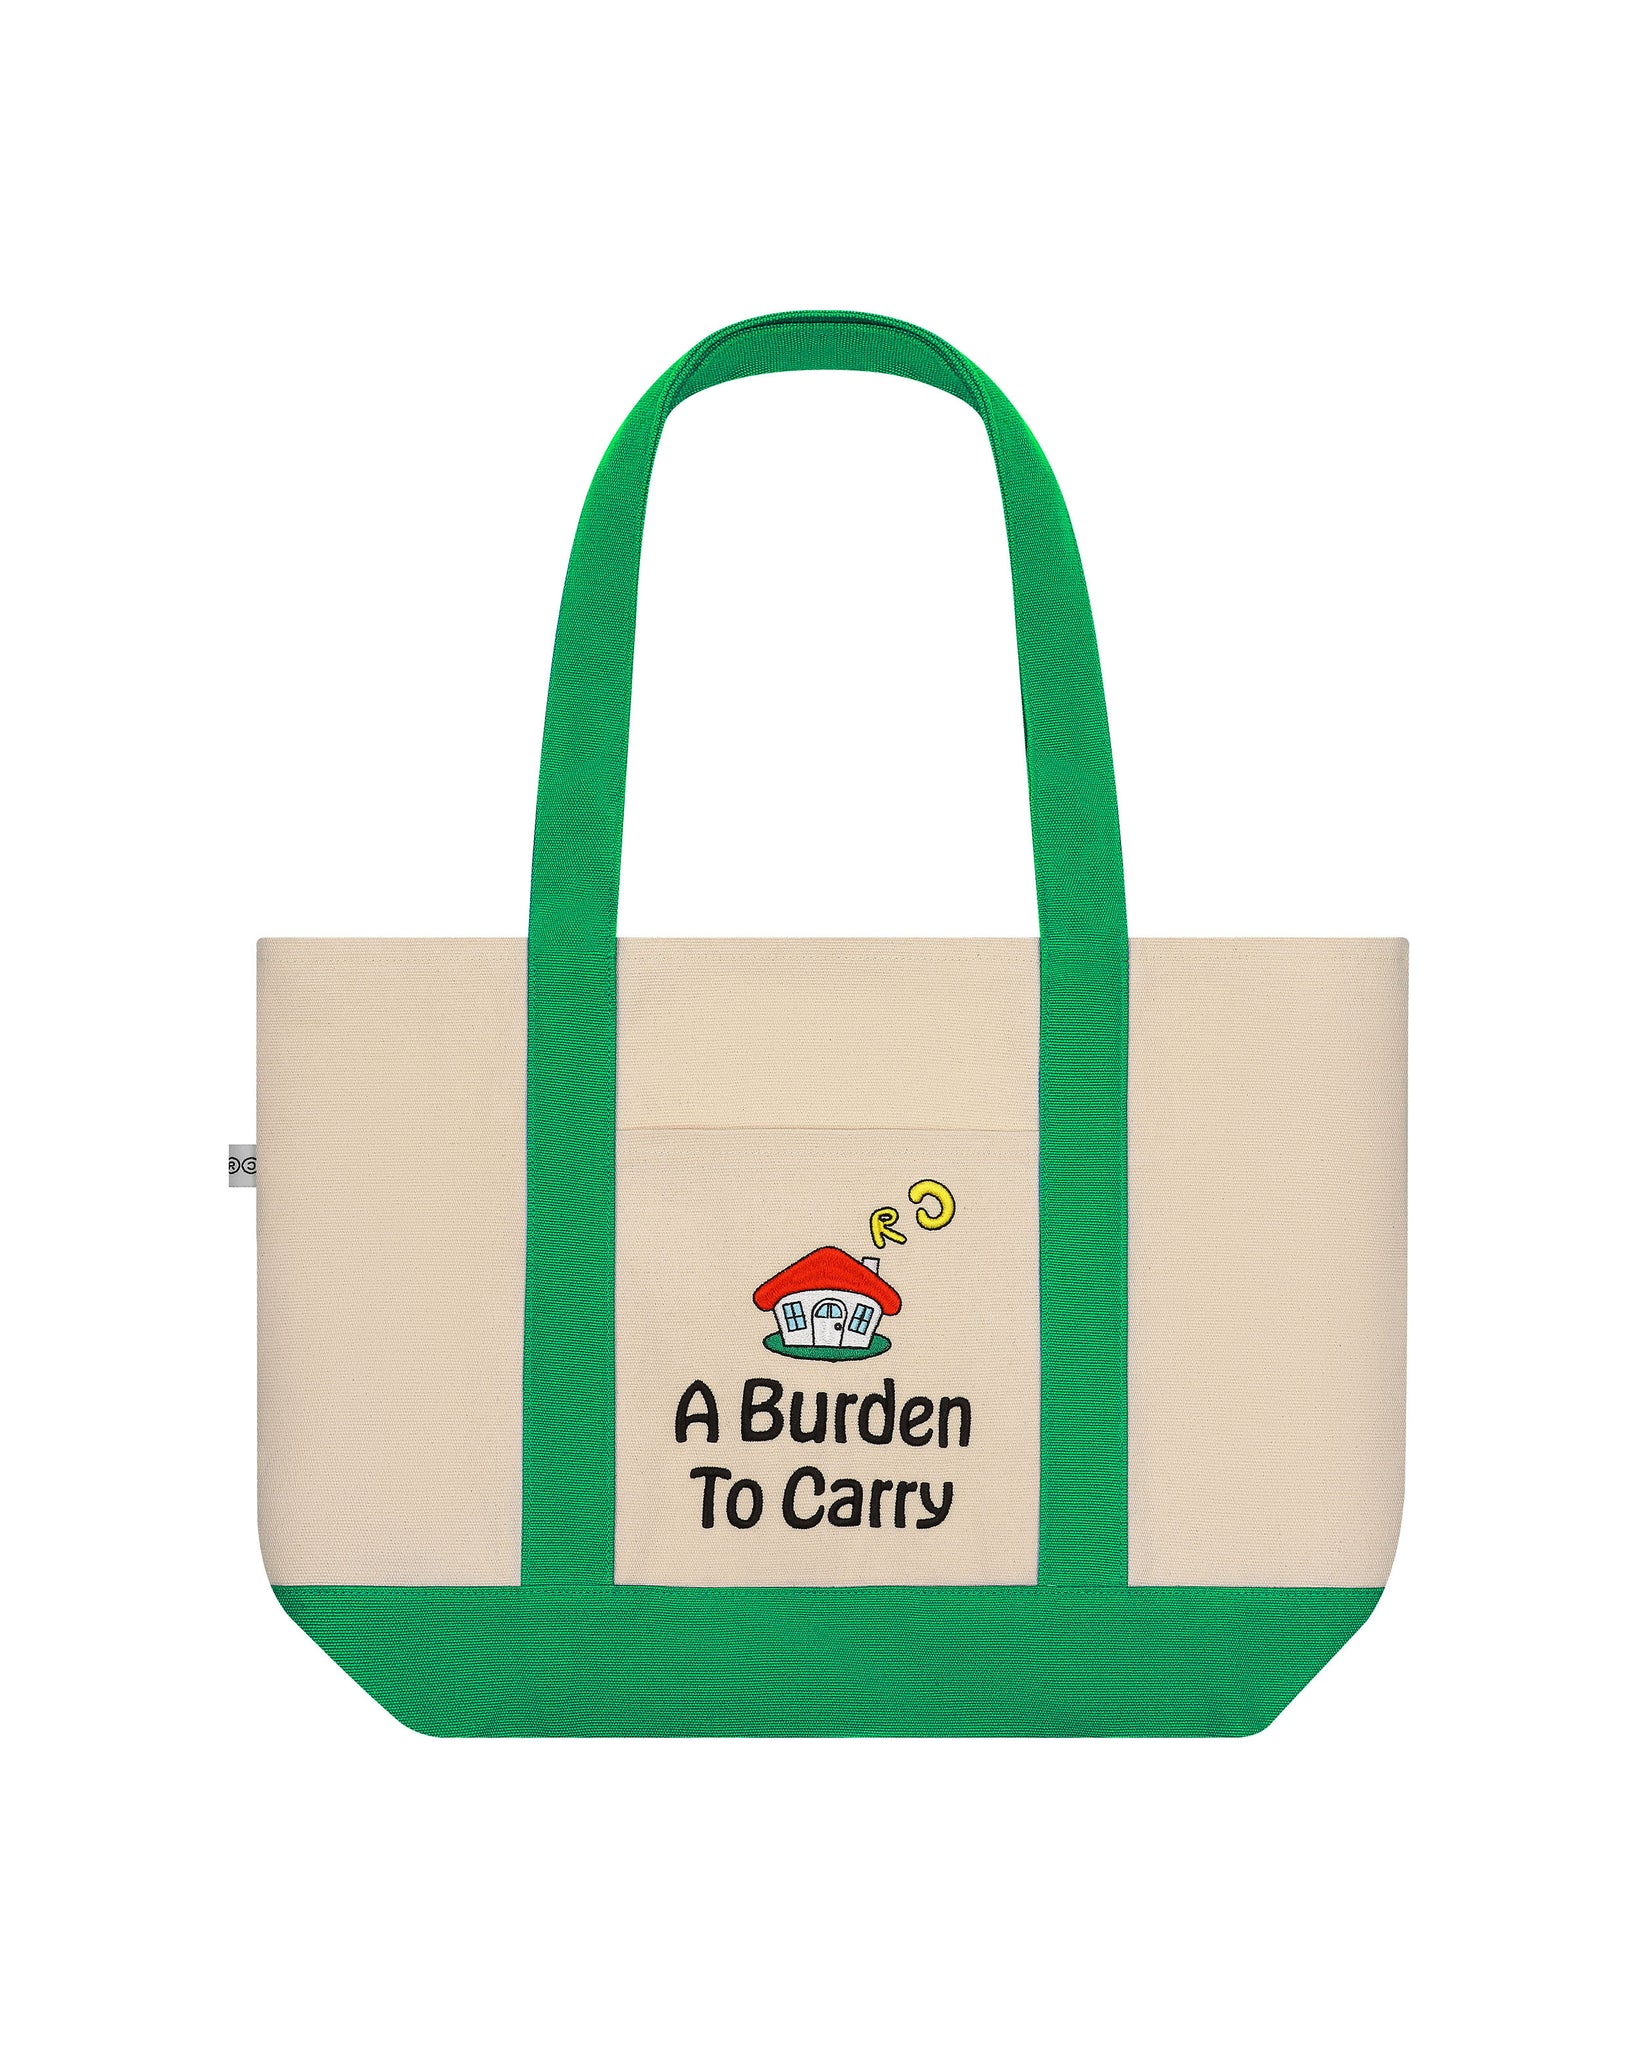 Burden Tote Bag / Chameleon Green